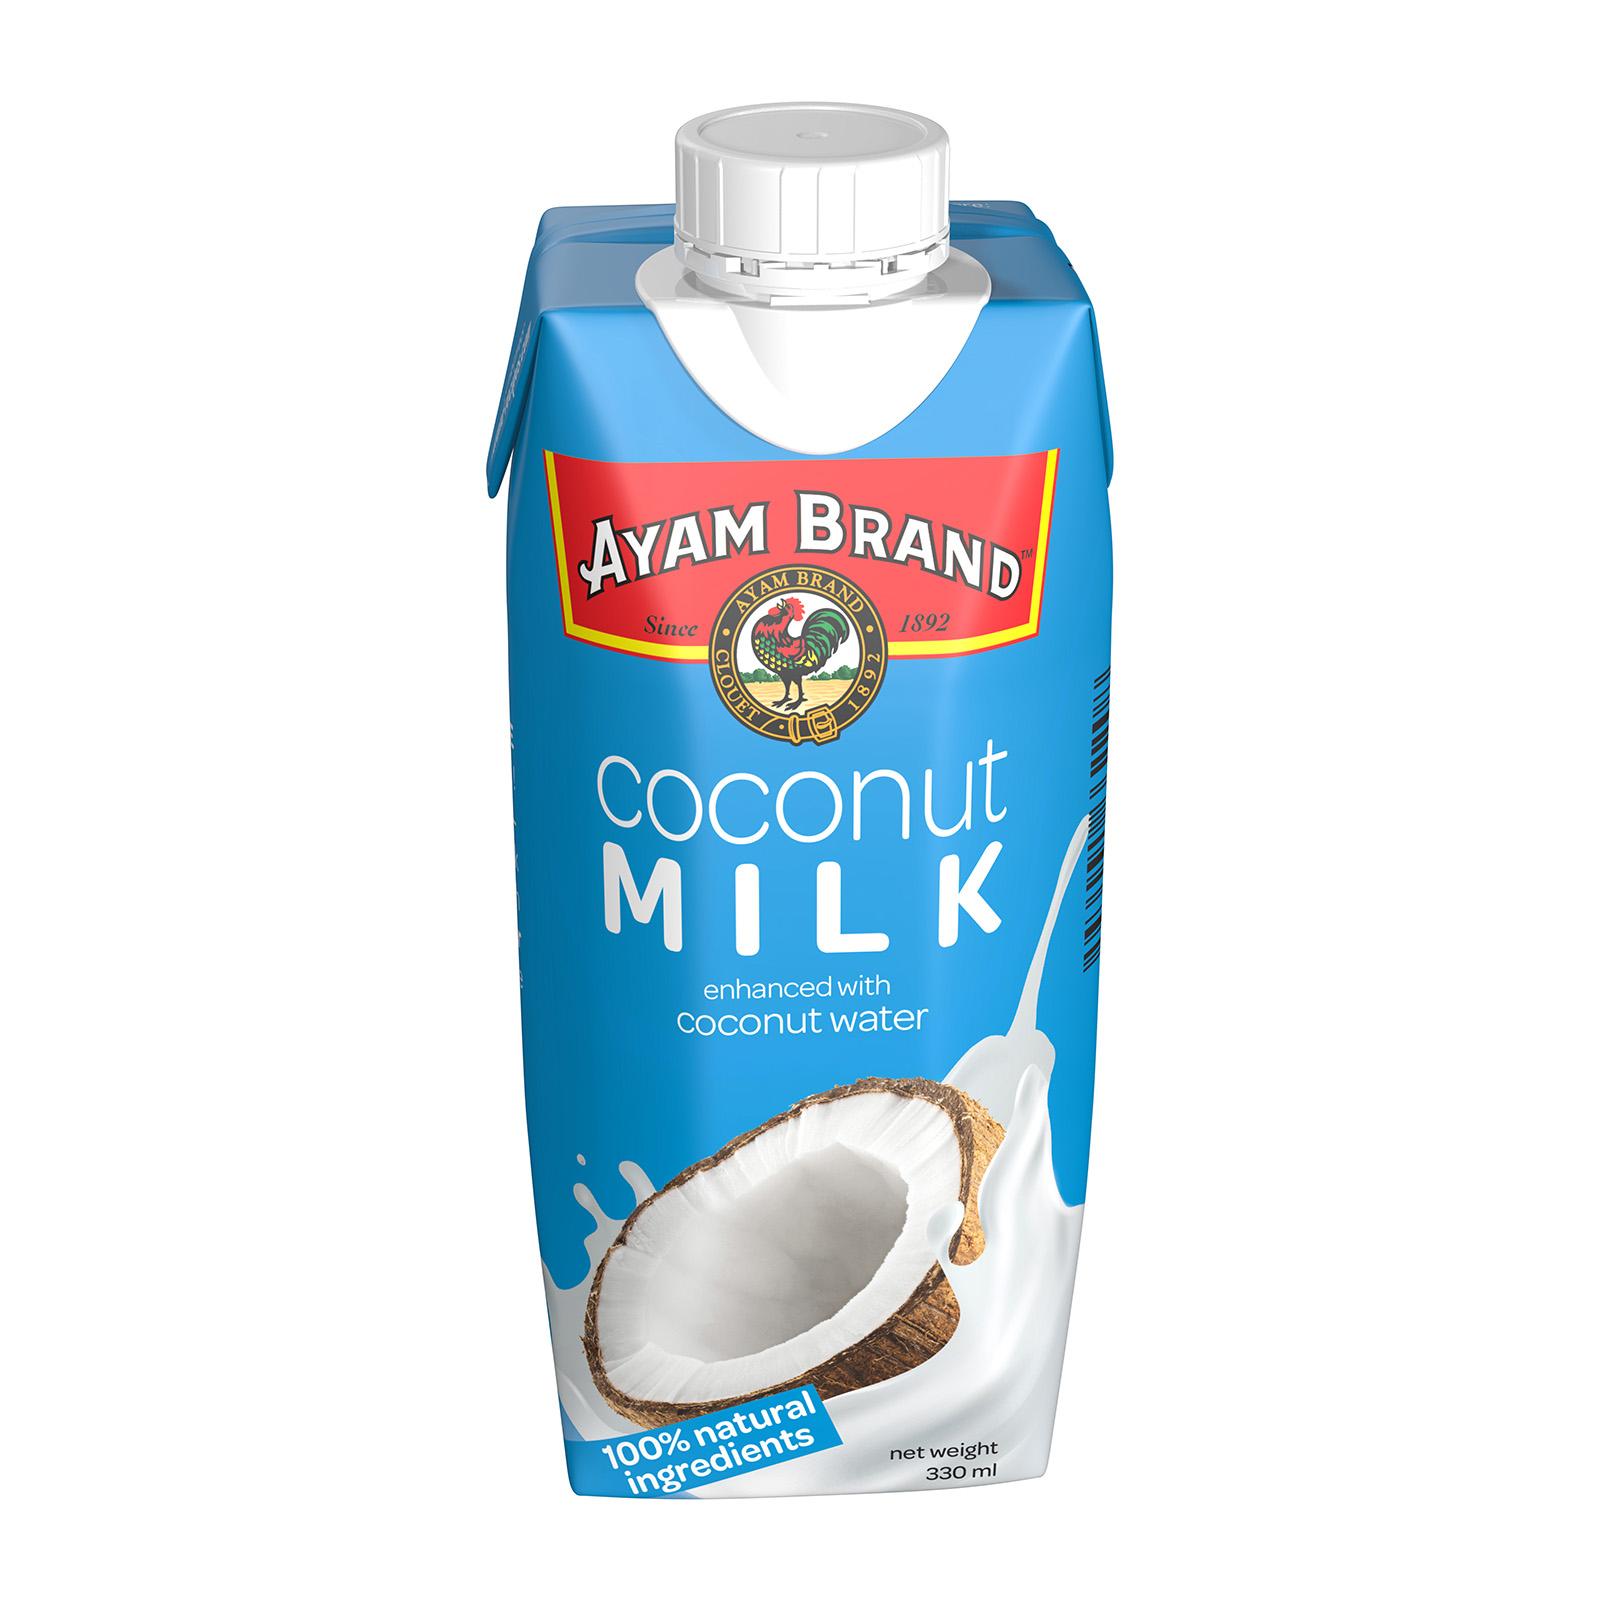 AYAM BRAND Coconut Milk 200ml - diffmarts Singapore